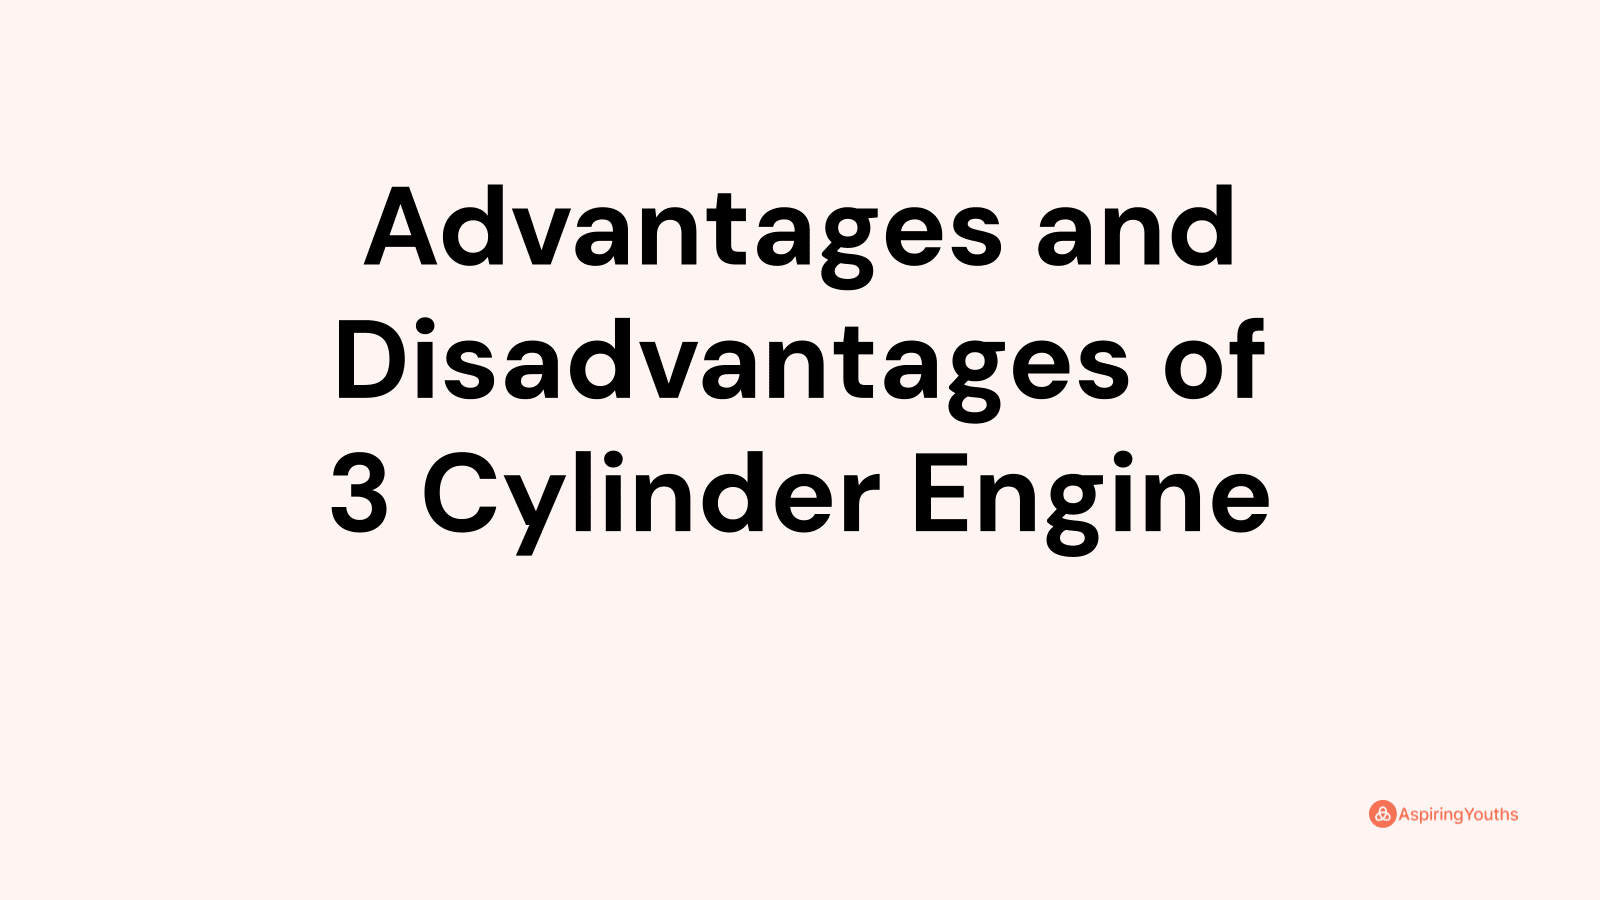 Advantages and disadvantages of 3 Cylinder Engine